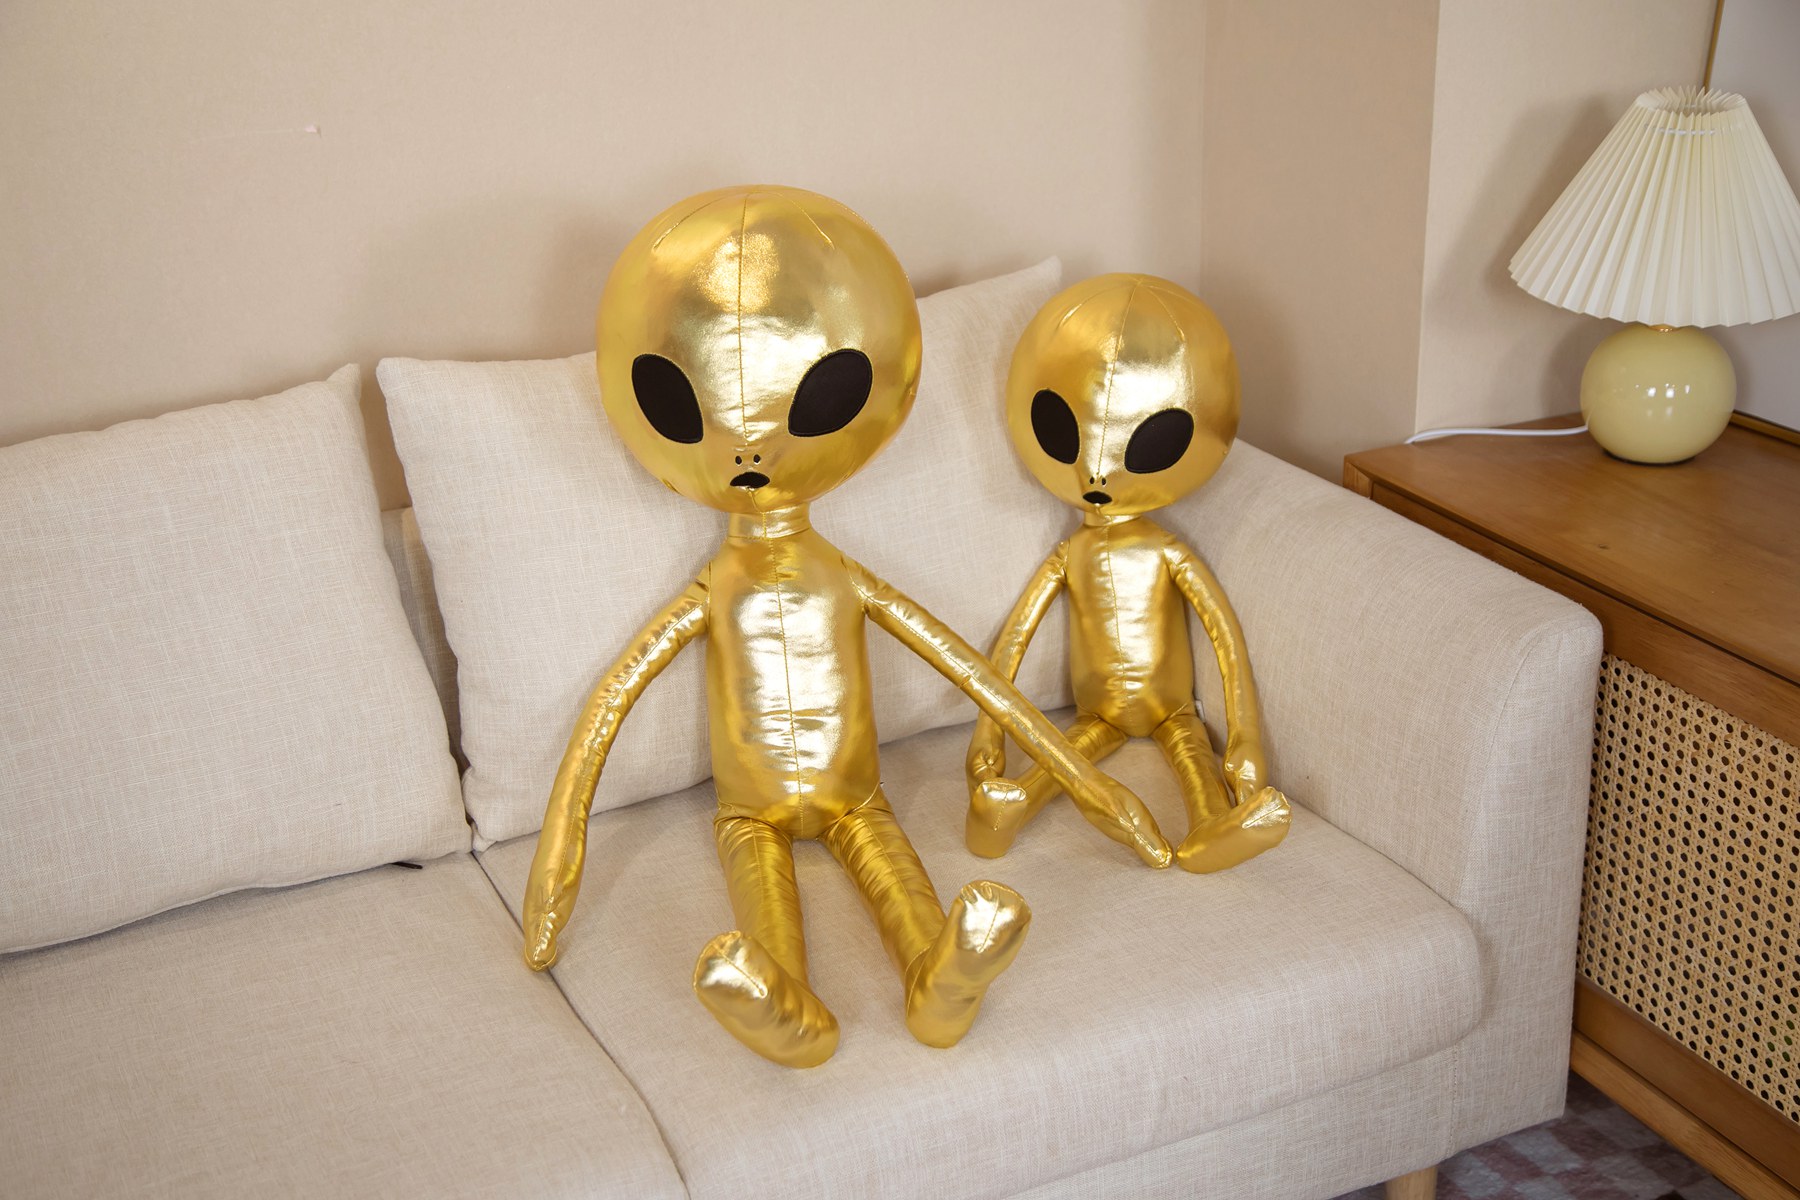 Extra Terrestrial Alien Soft Stuffed Plush Doll